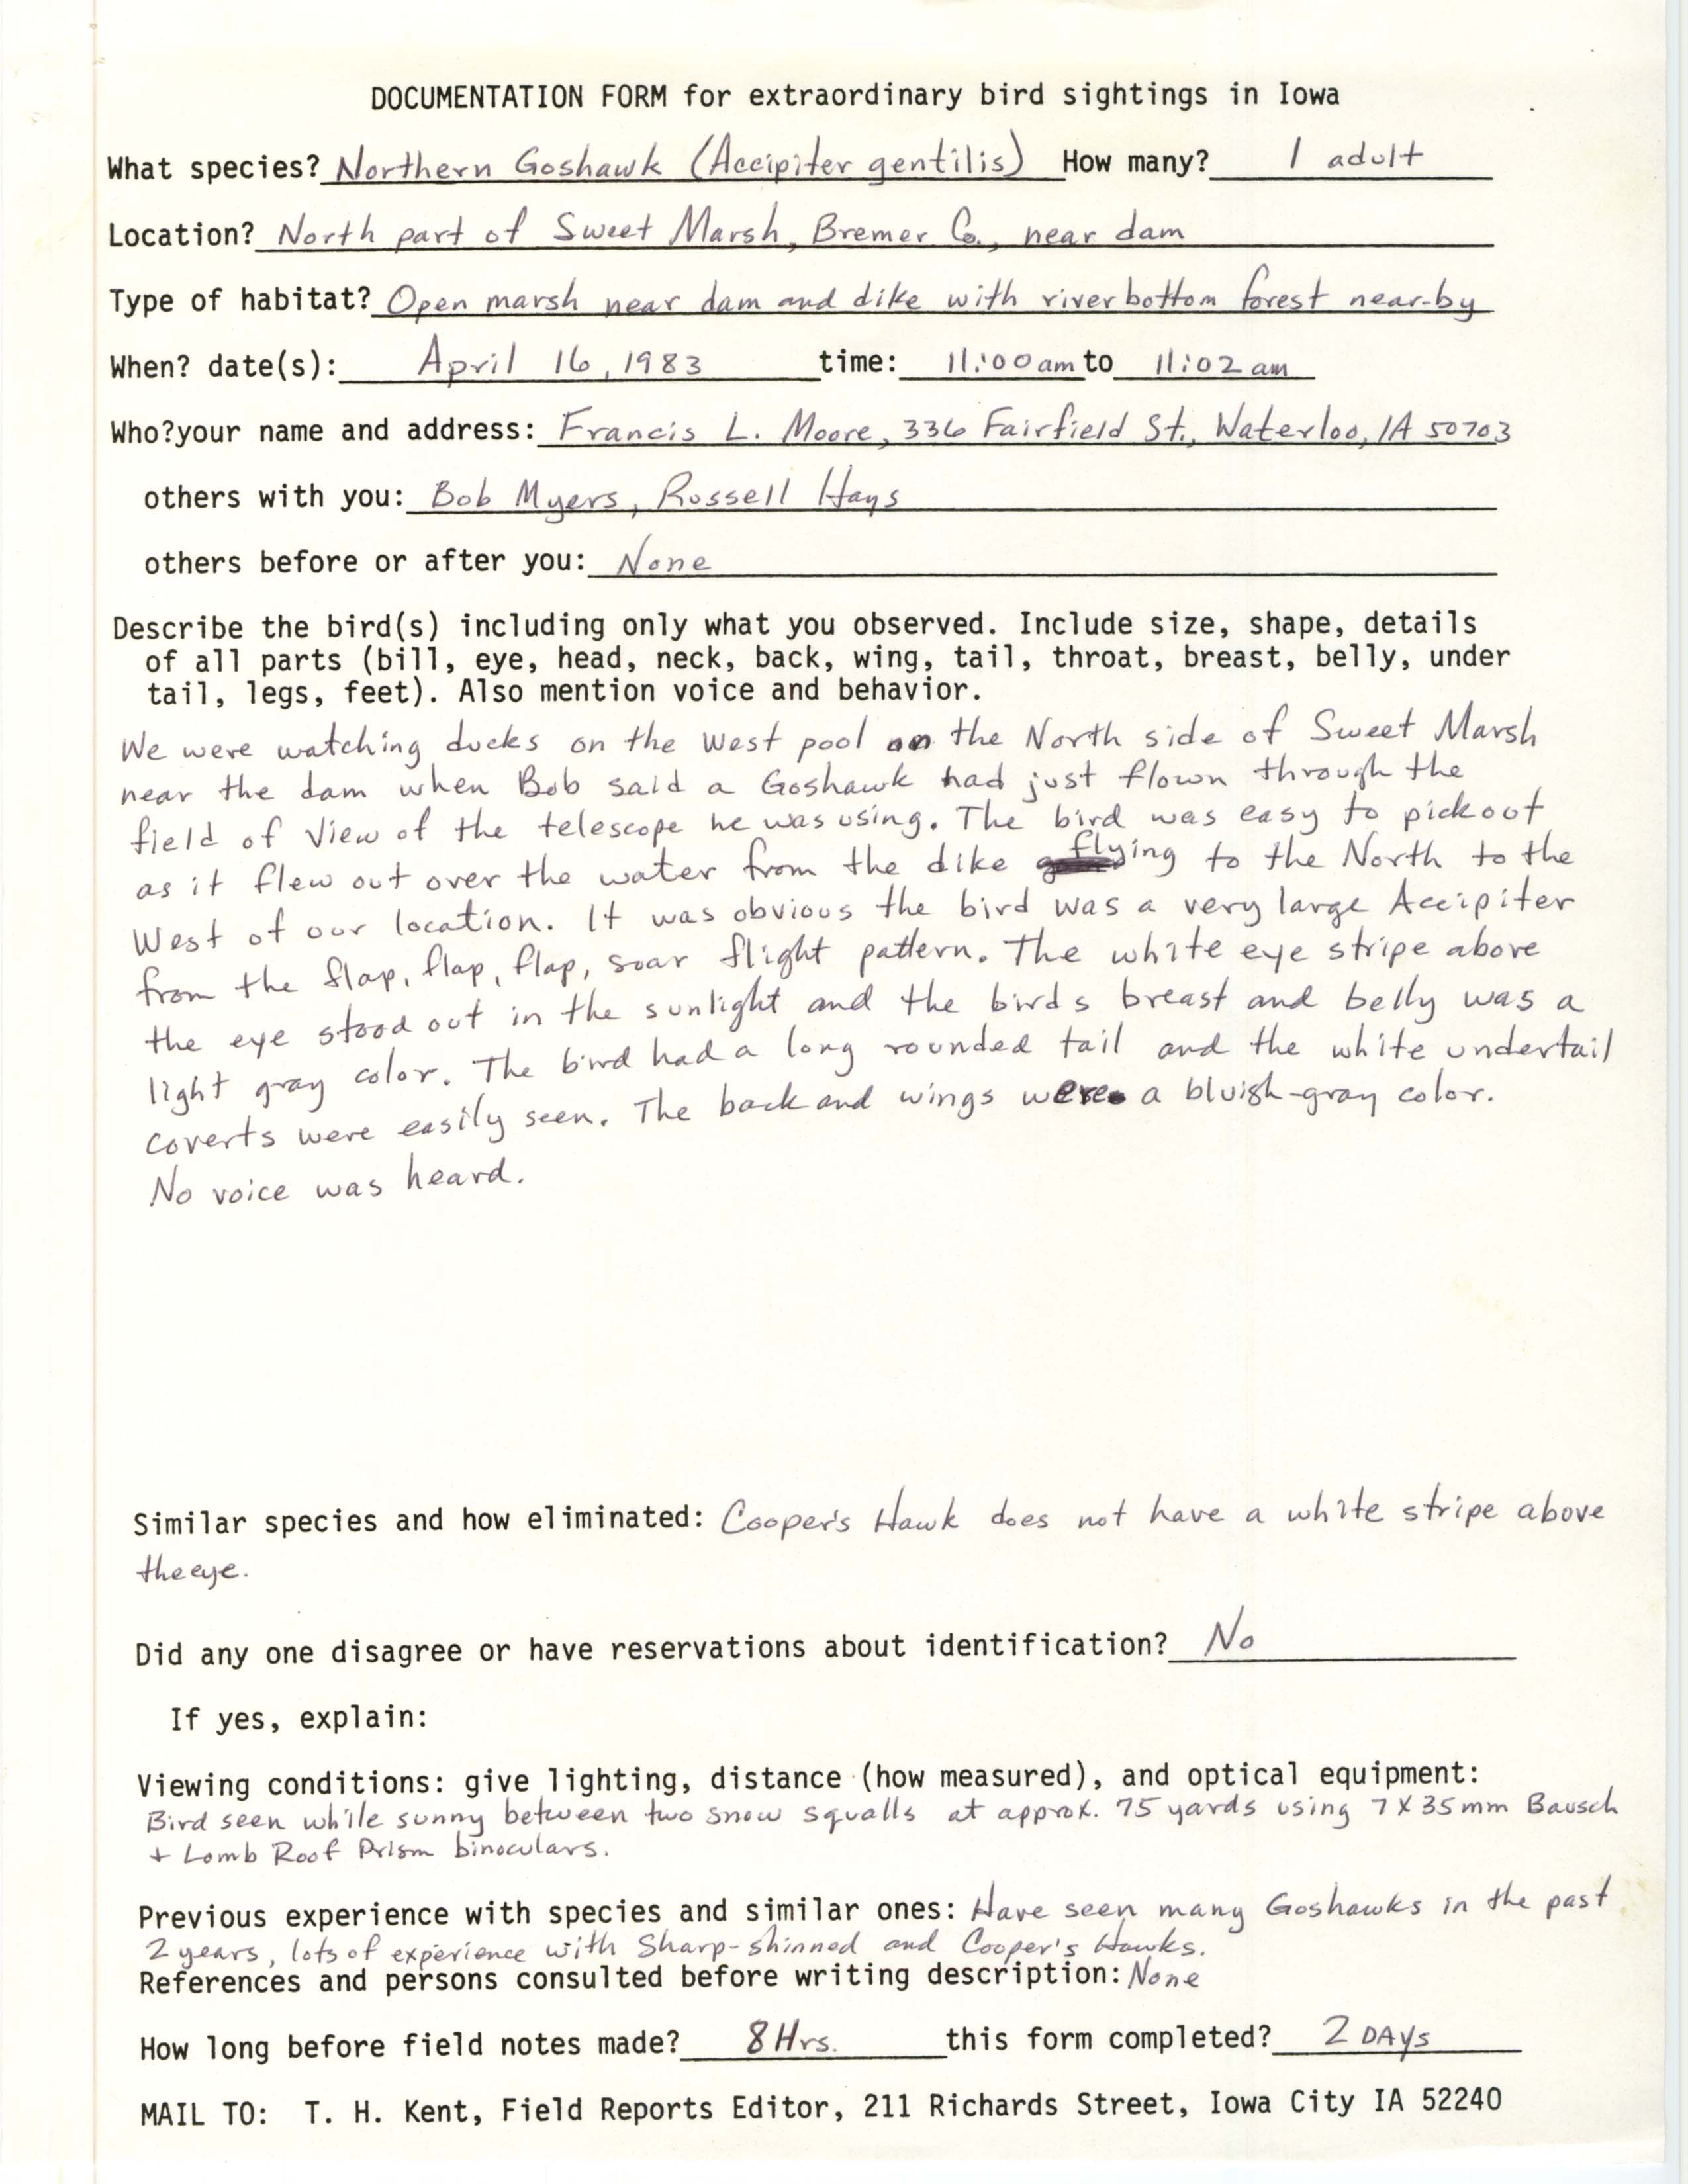 Rare bird documentation form for Northern Goshawk at Sweet Marsh, 1983